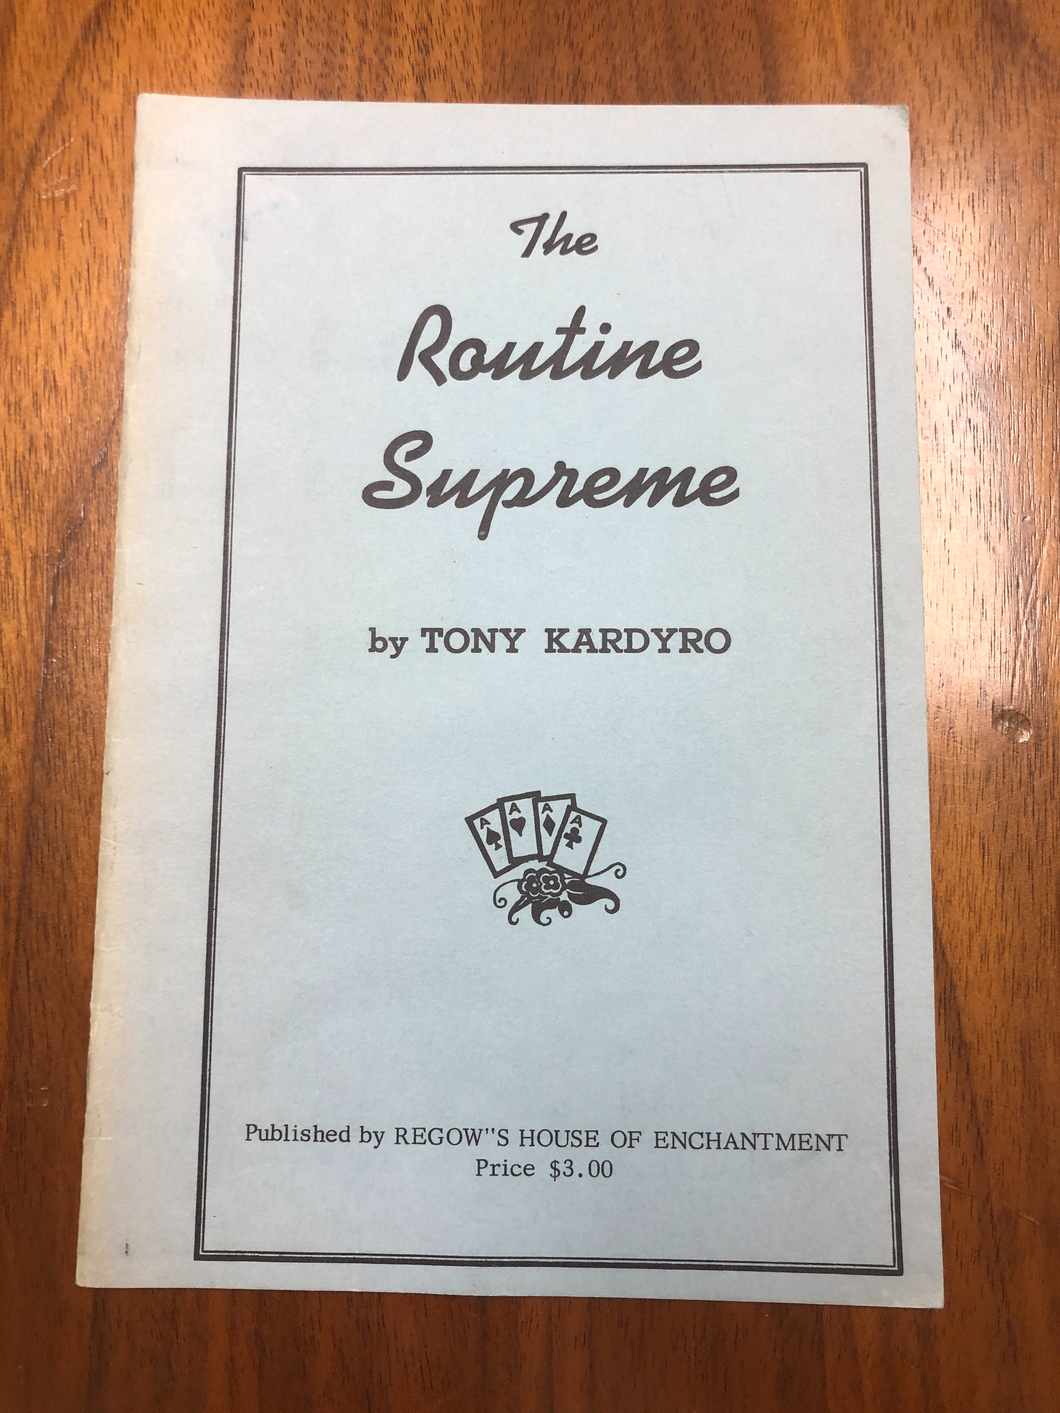 There Routine Supreme by Tony Kardyro